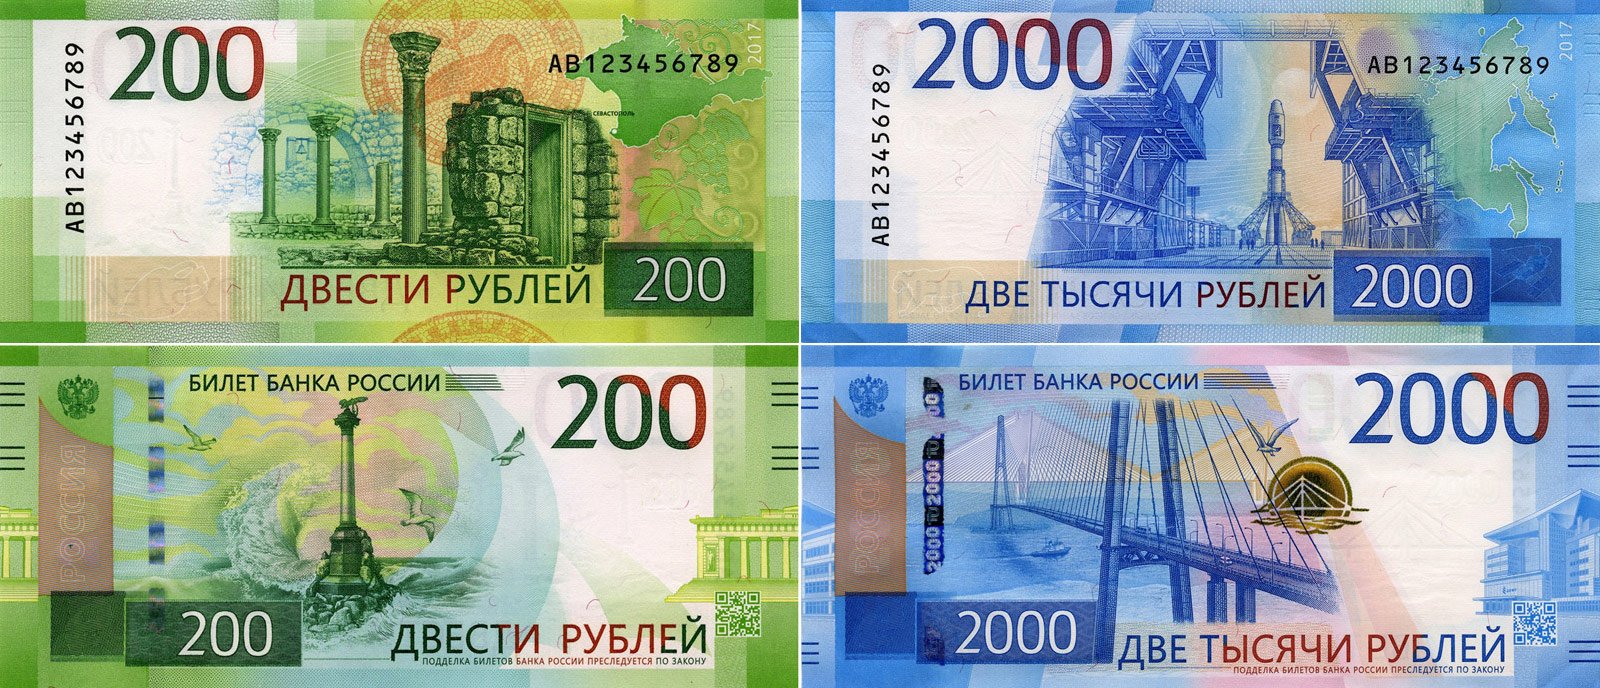 200 000 рублей в биткоинах what is the value of 1 bitcoin